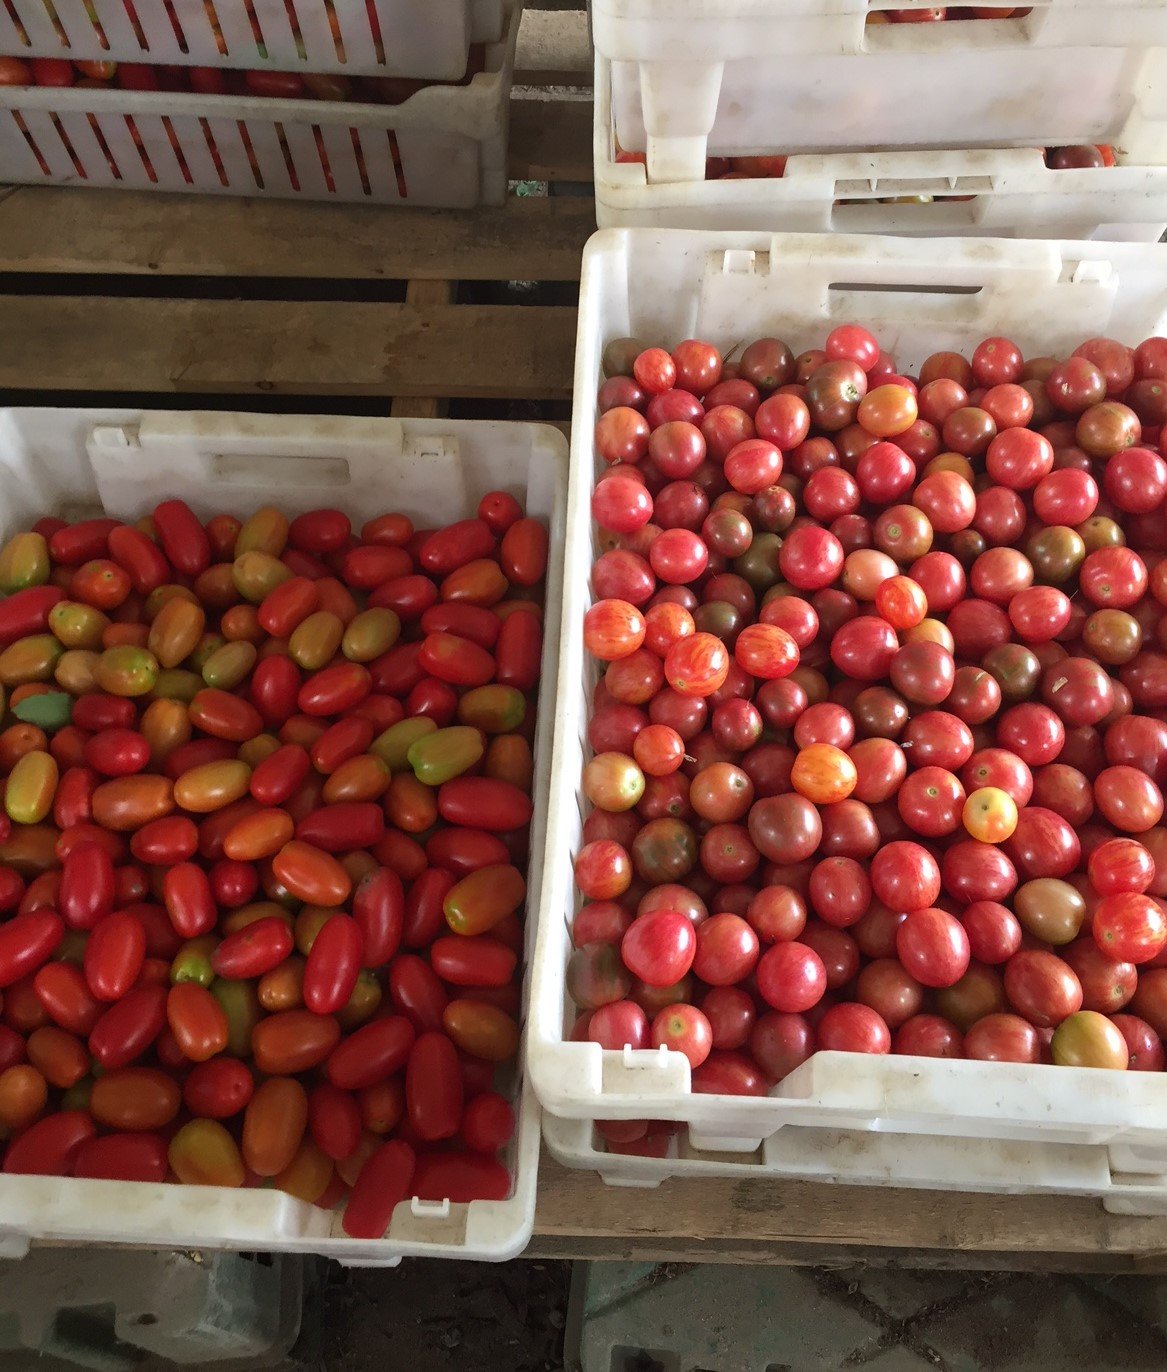 Previous Happening: Week 11 Aug 21-26 Cooper's CSA Farm Happenings -Let The field tomatoes begin!!